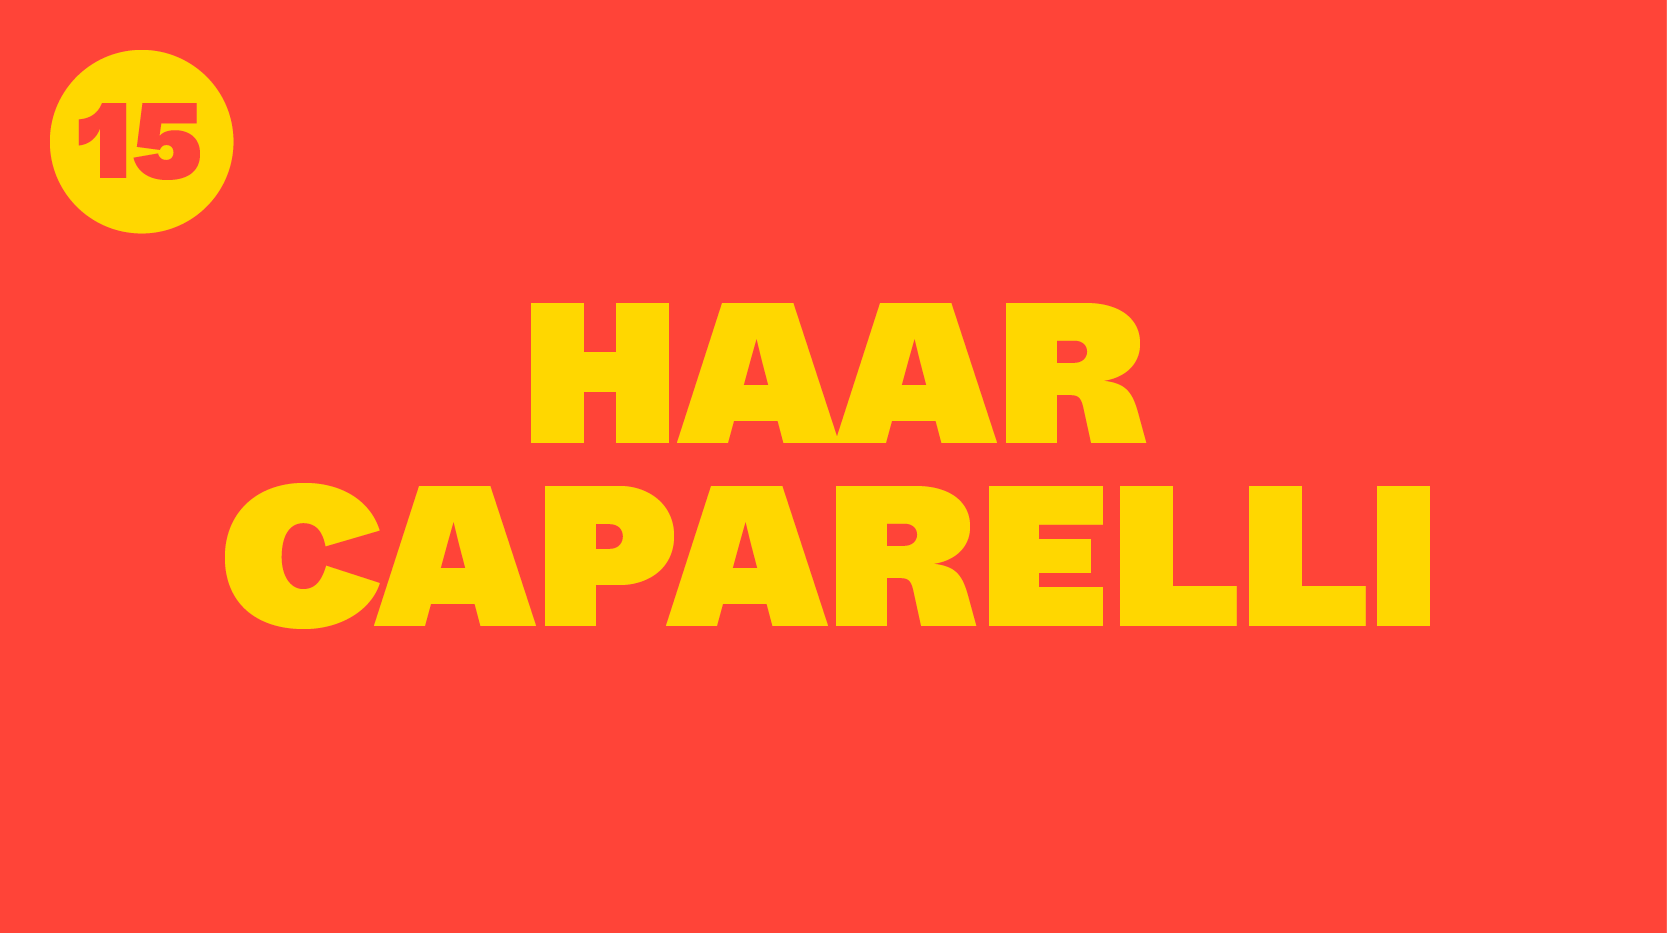 HAAR Caparelli